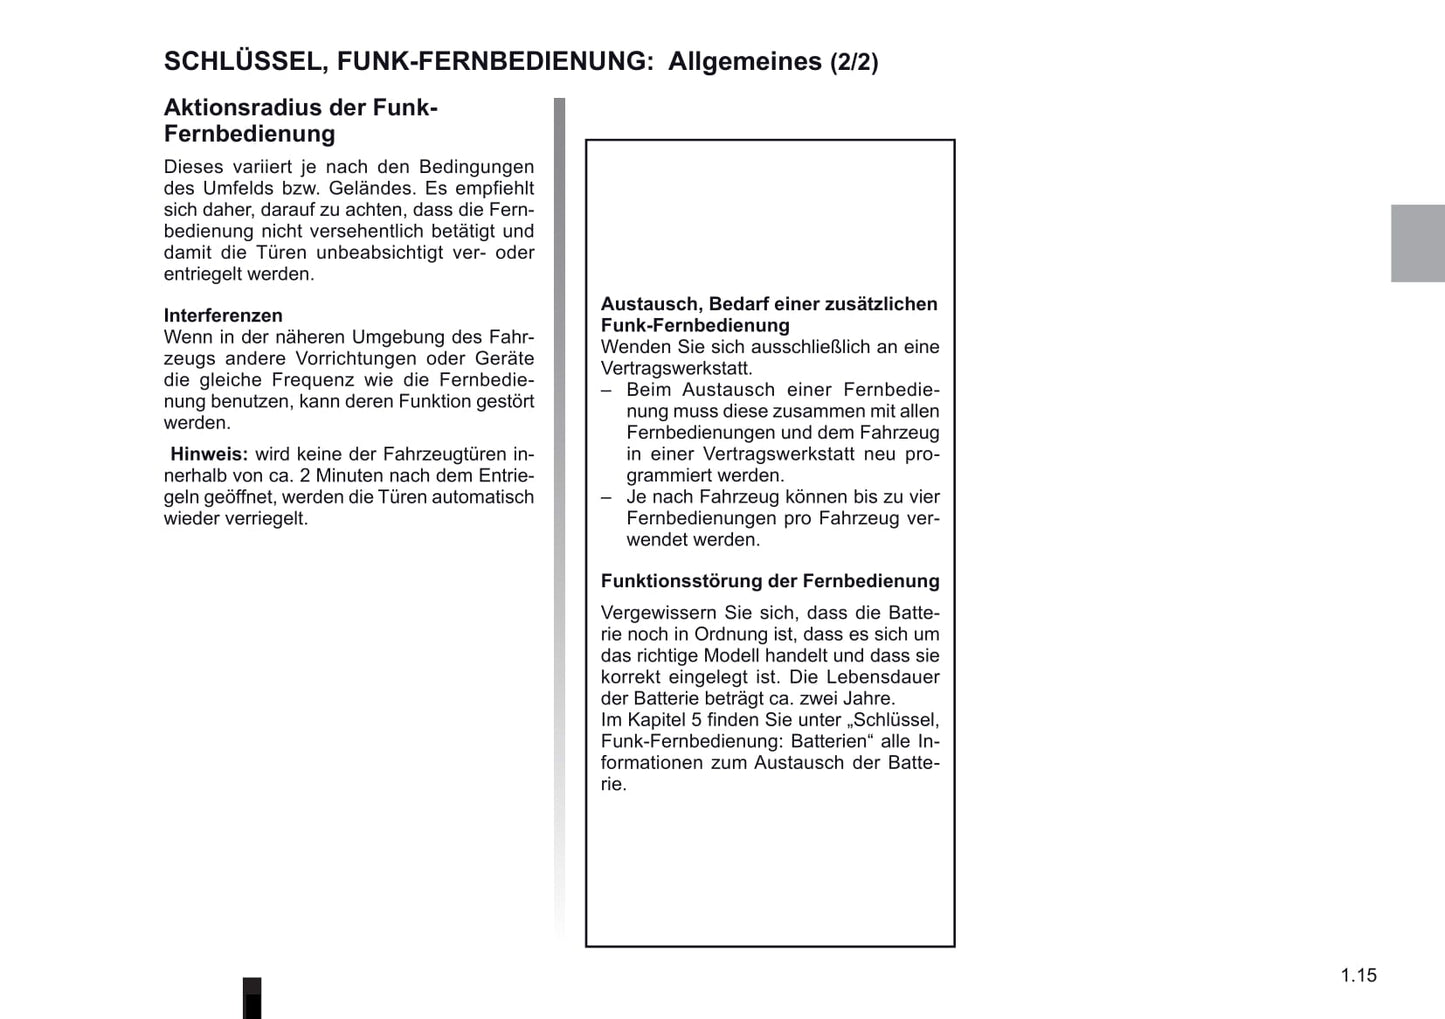 2012-2013 Renault Kangoo Z.E. Owner's Manual | German